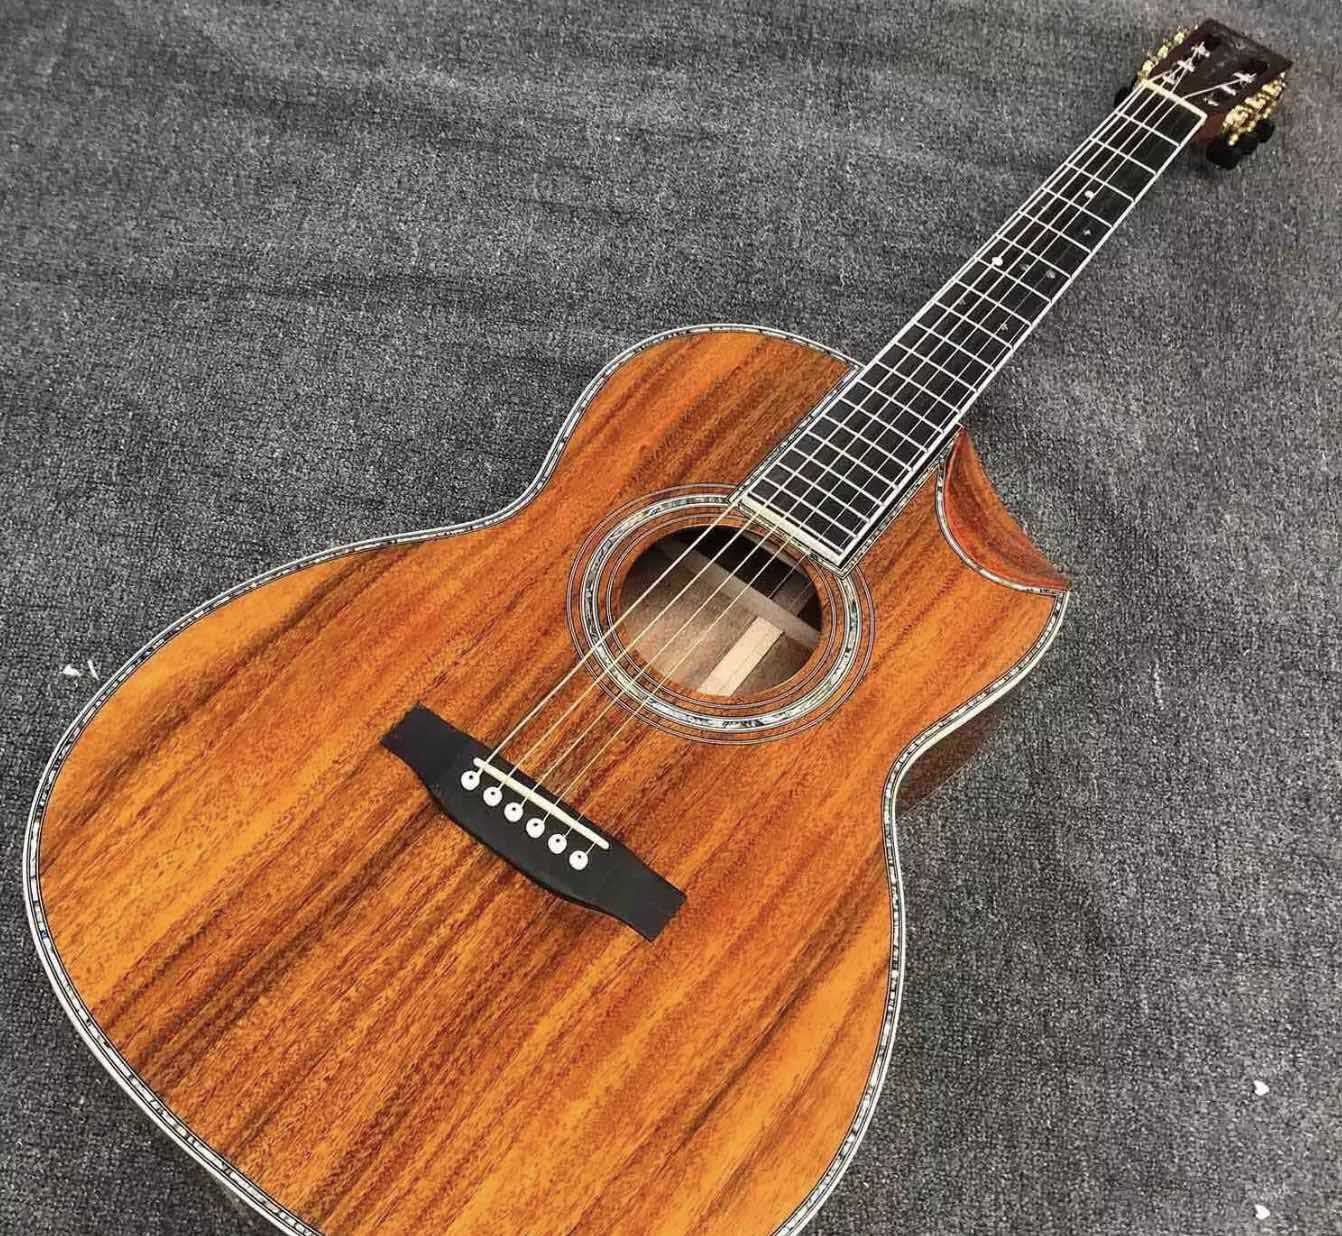 Ooo cutaway Body koa back side Acoustic Guitar abalone binding Customized guitar